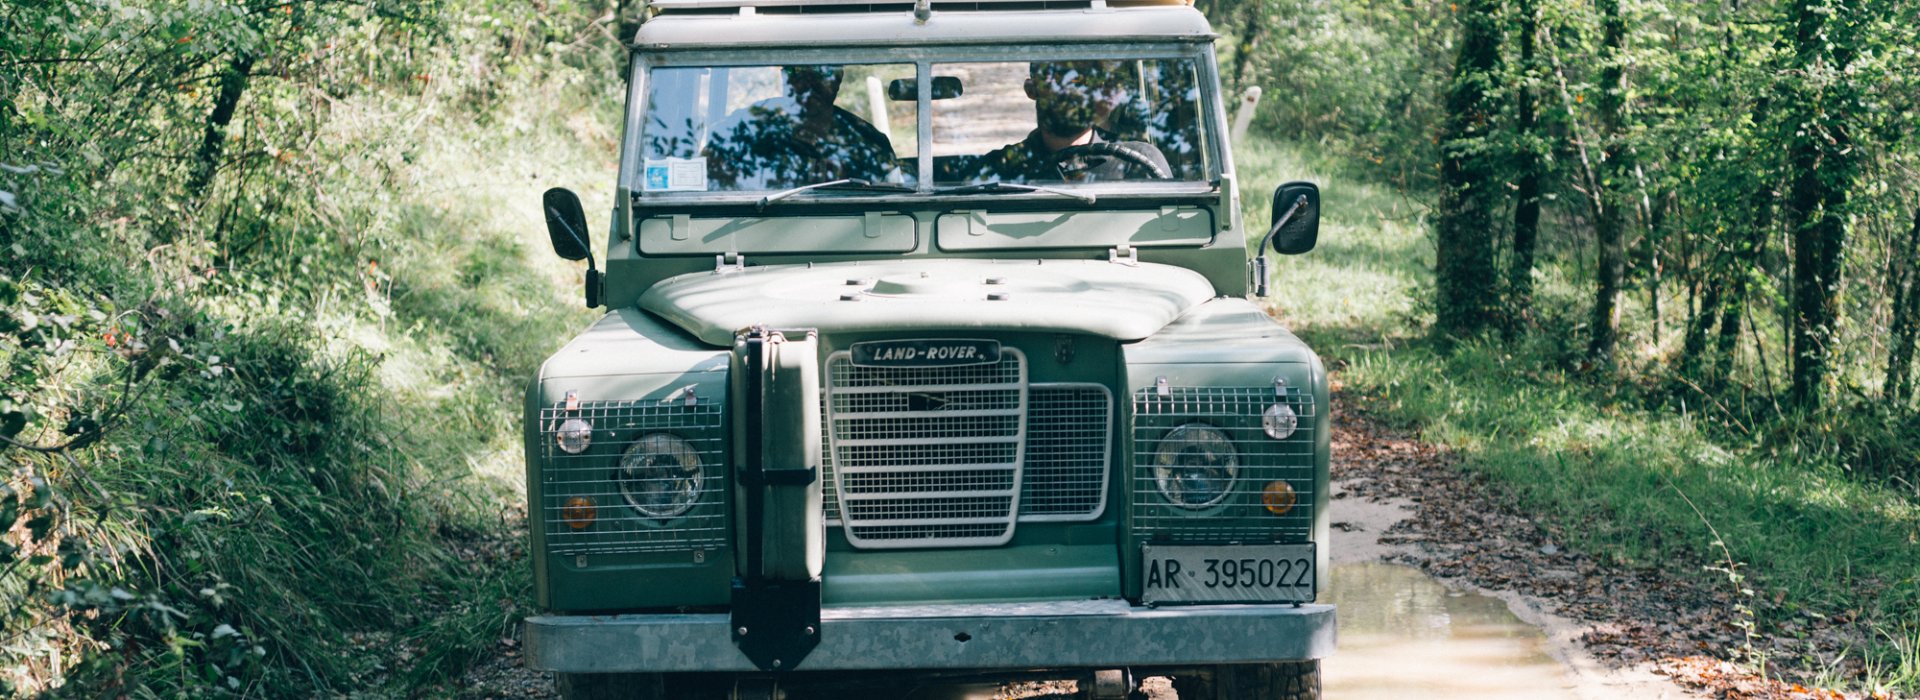 Discover Chianti Classico off road in a Land Rover Defender